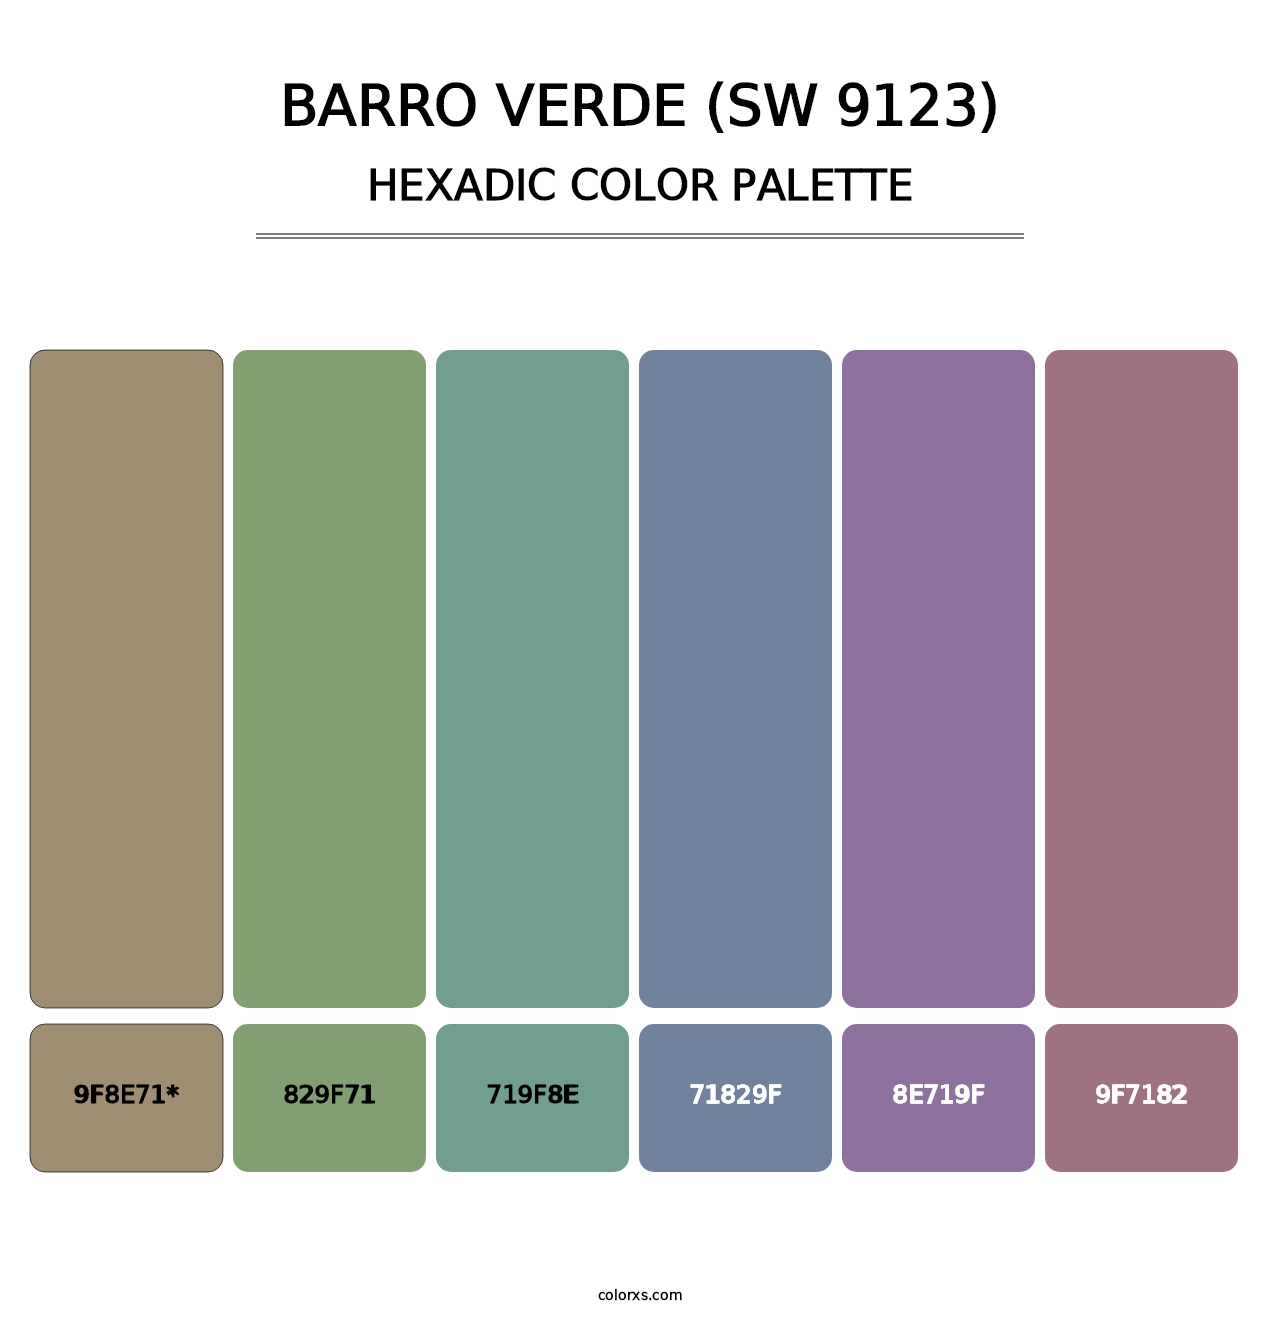 Barro Verde (SW 9123) - Hexadic Color Palette